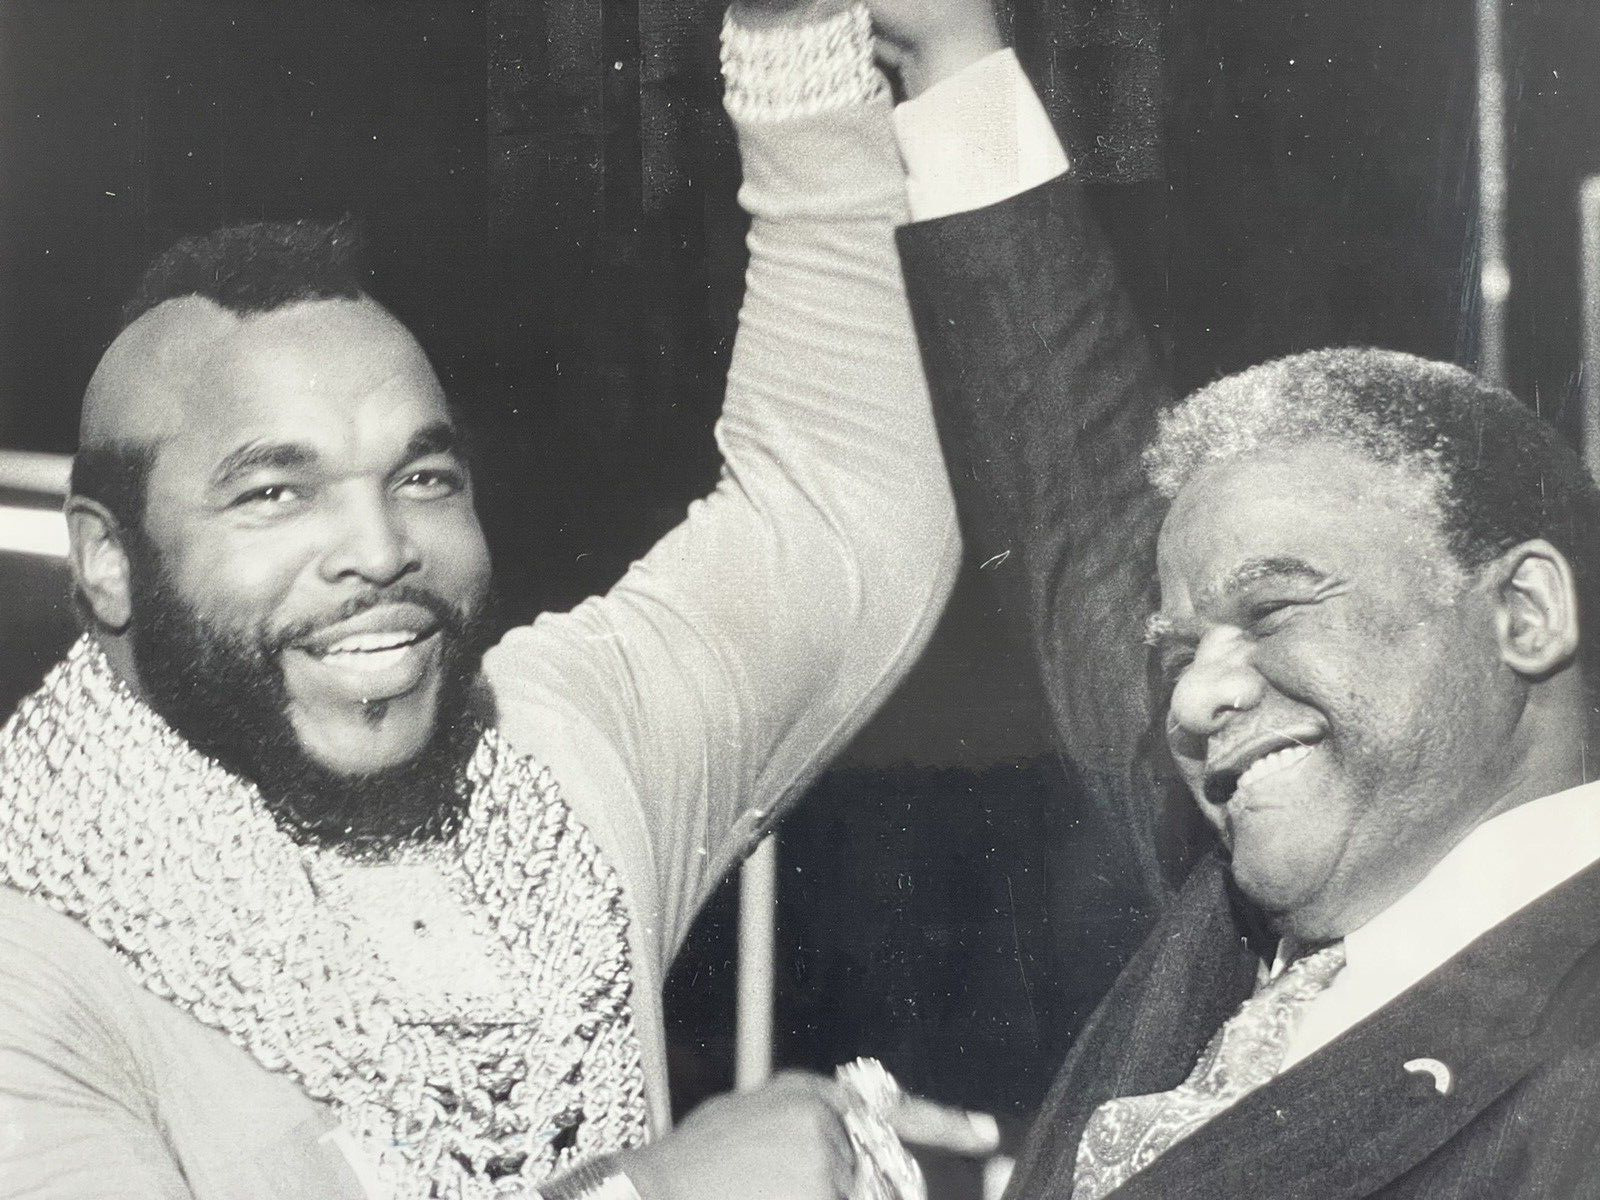 Mr. T and Harold Washington Civil Rights Press Photograph 1986 #historyinpieces